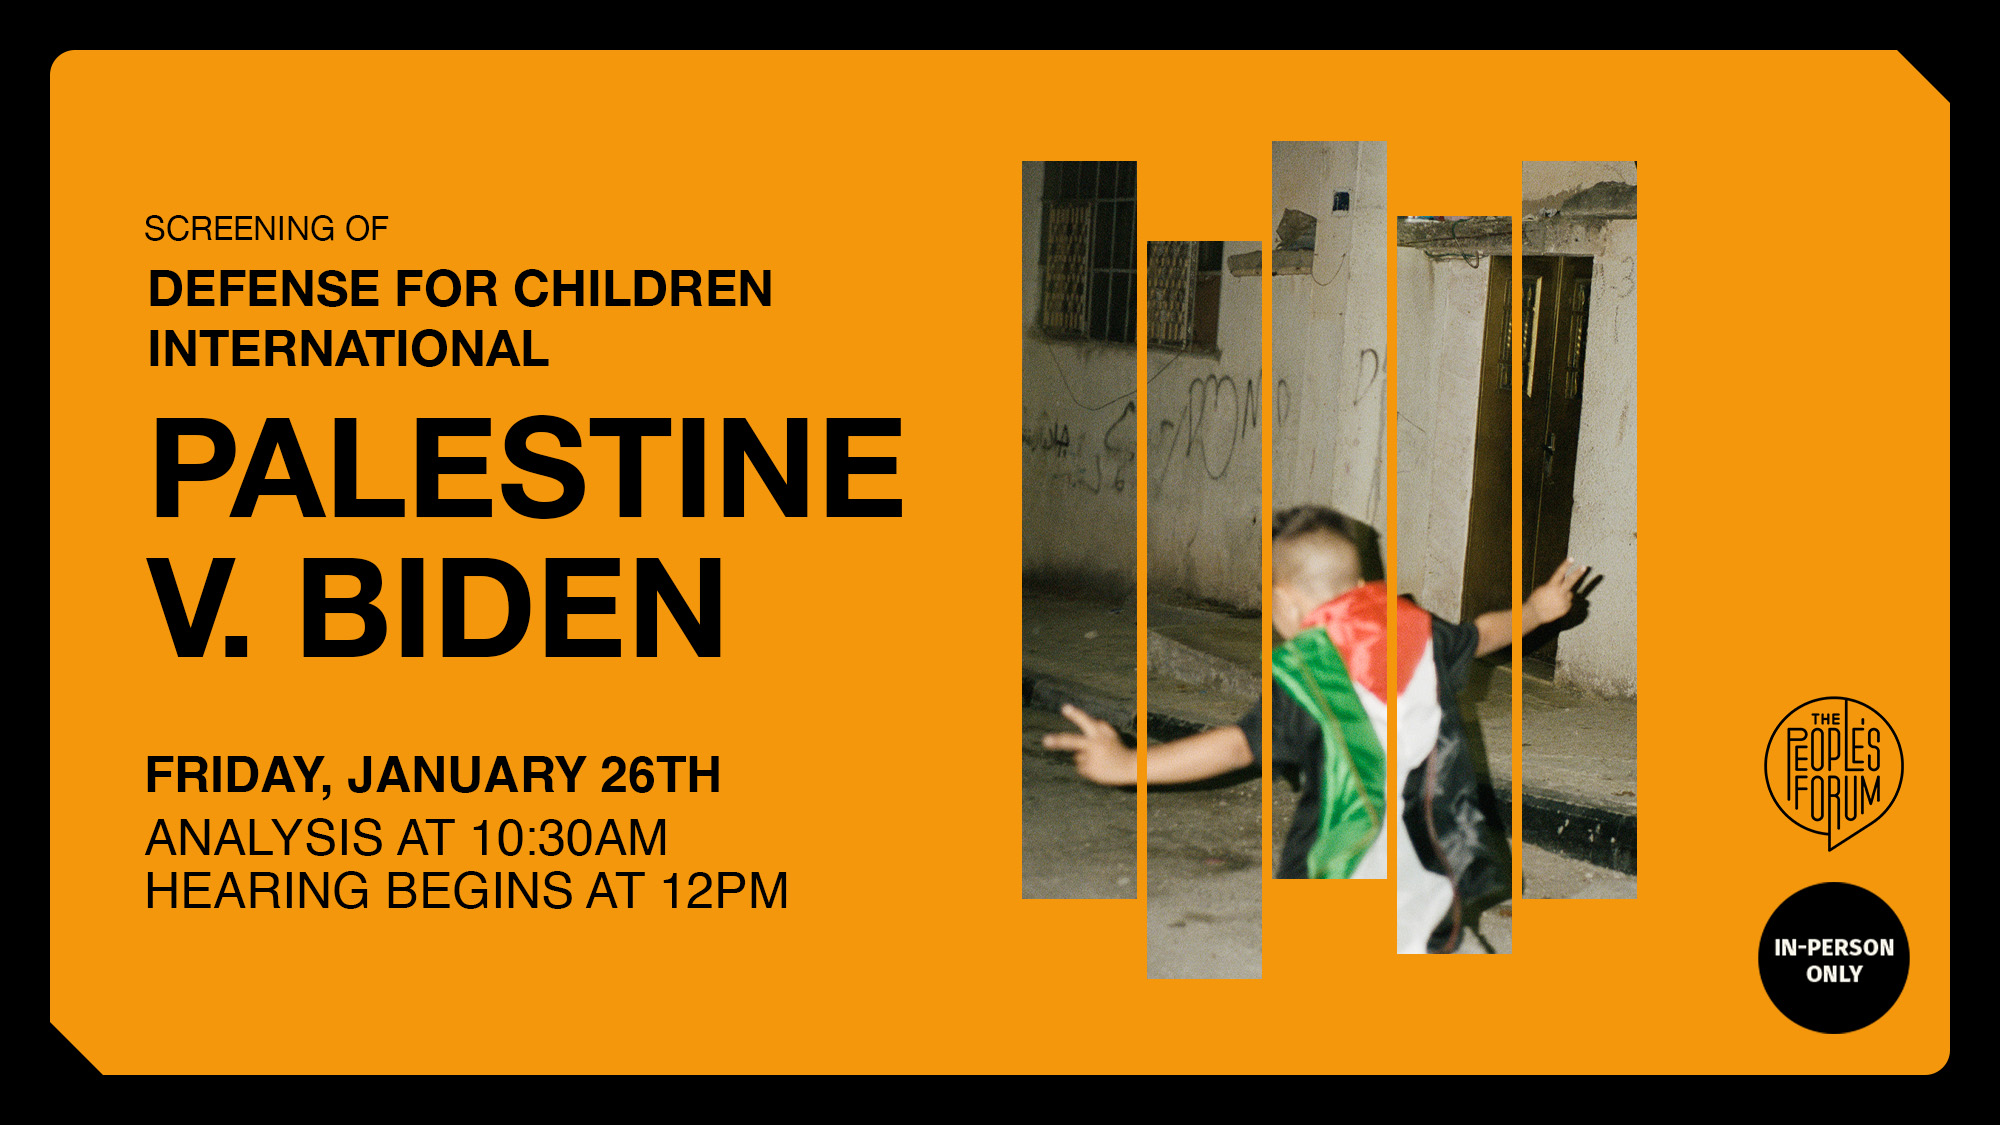 Orange banner that reads: "Screening of Defense for Children International Palestine v. Biden. Friday, January 26th. Analysis at 10:30AM, Hearing begins at 12PM